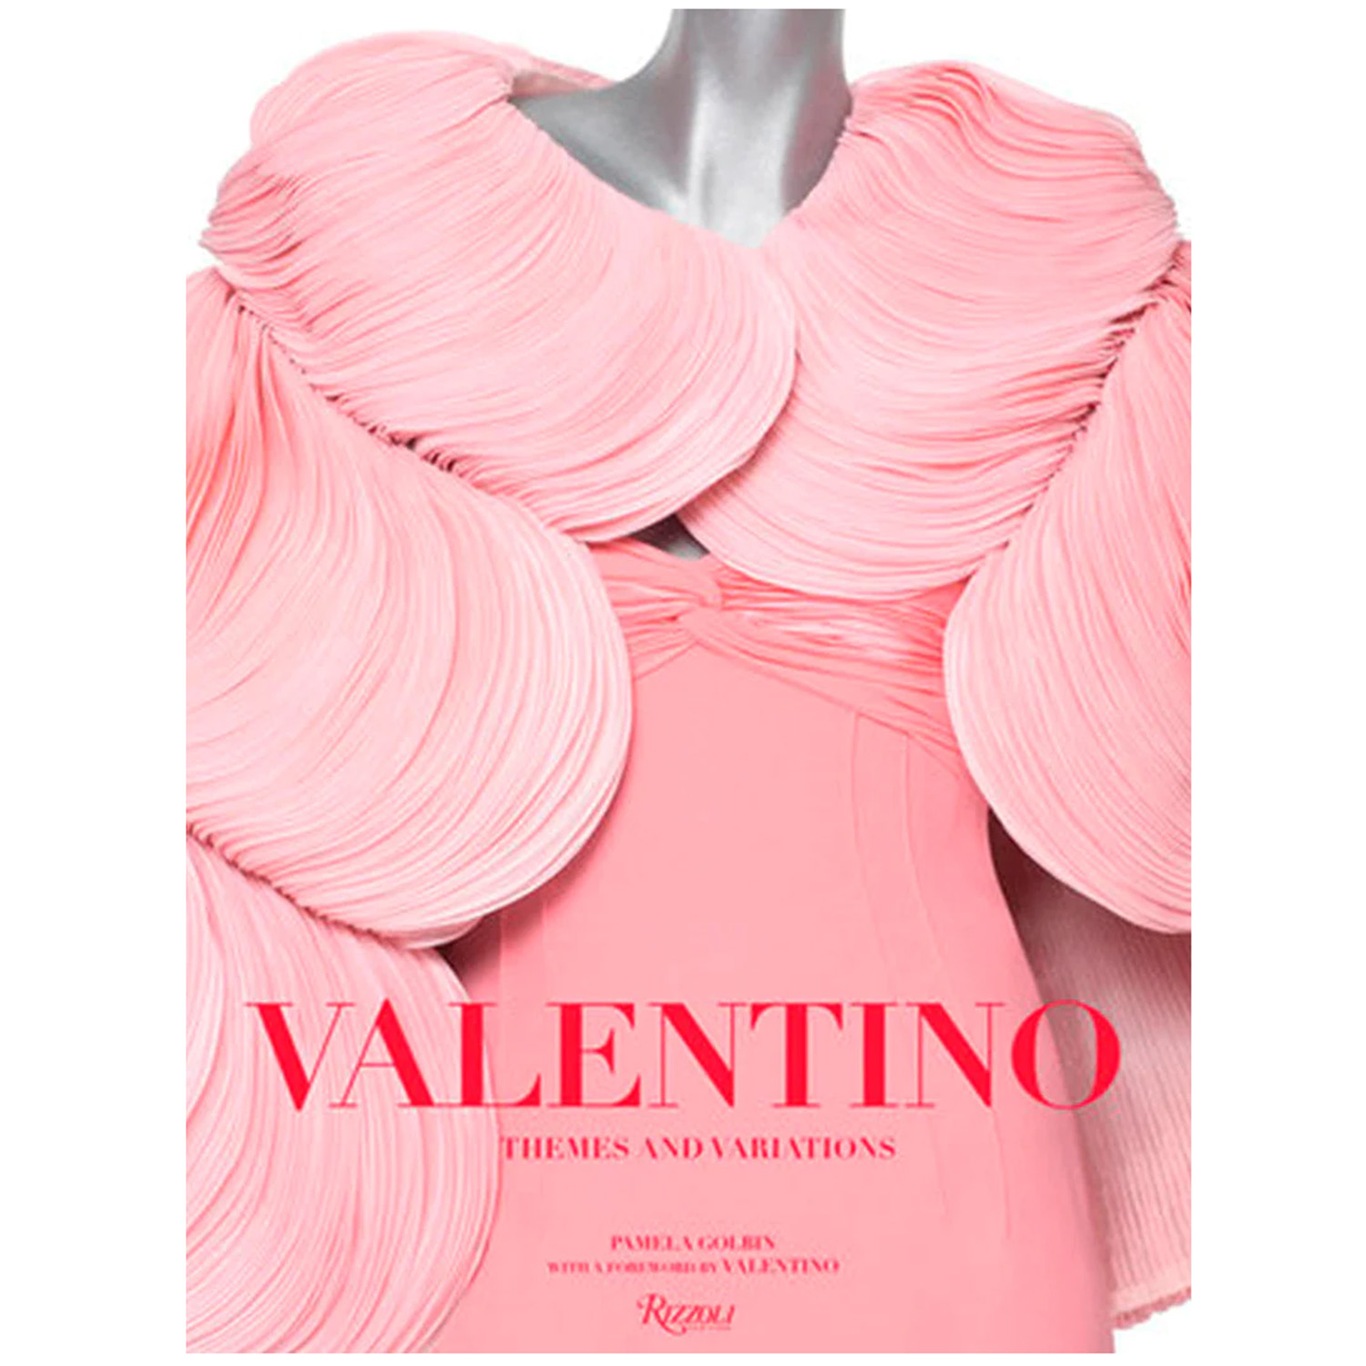 Valentino: Themes and Variations Bok